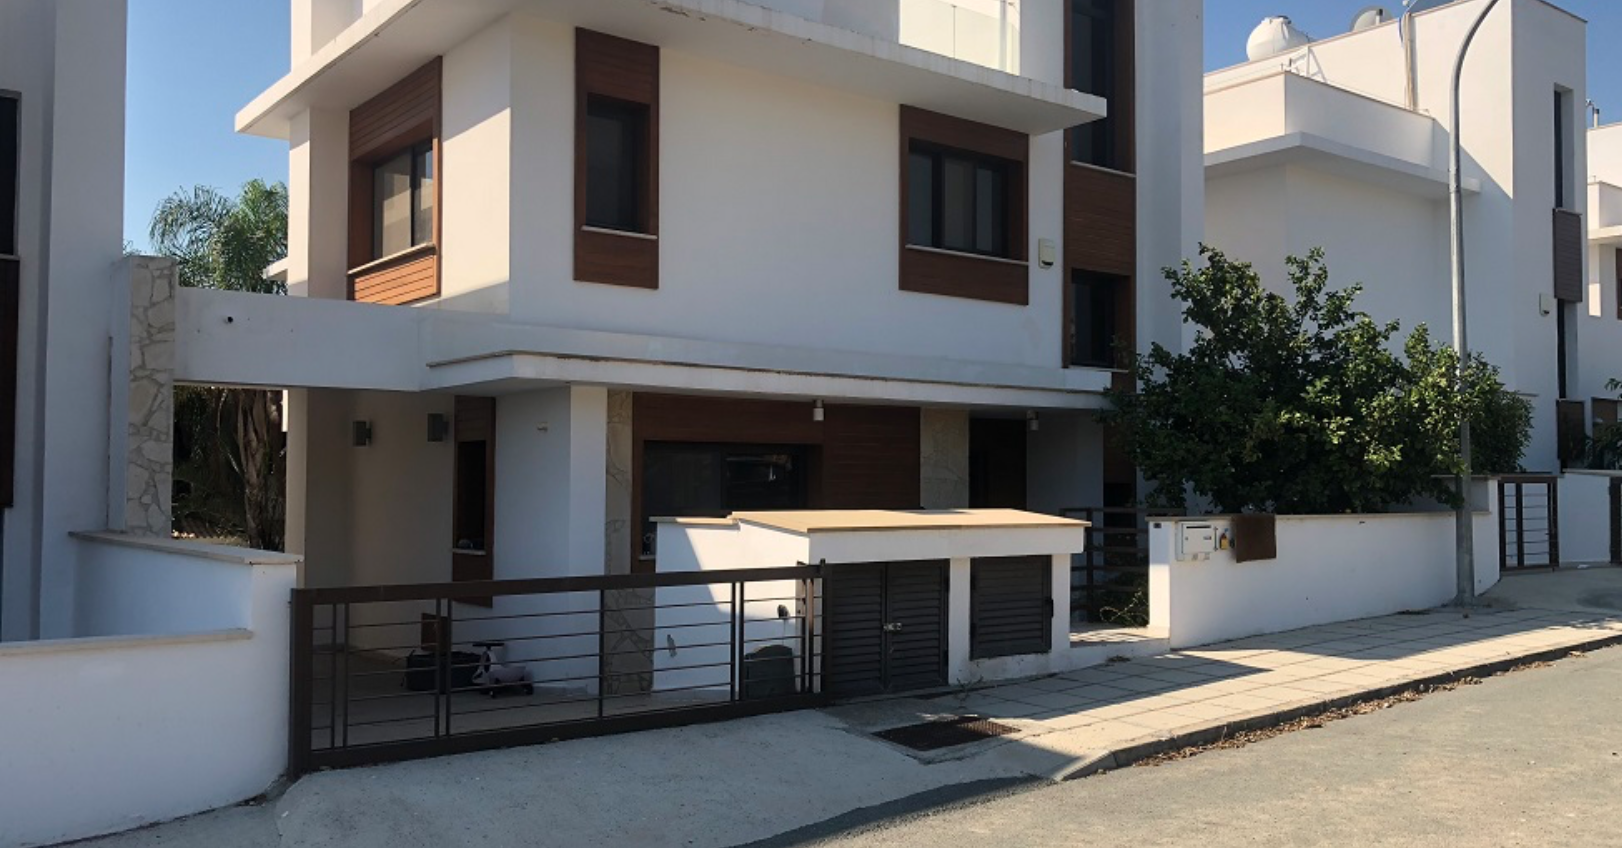 Three-Bedroom House In Paramali, Limassol (3 Bedroom)